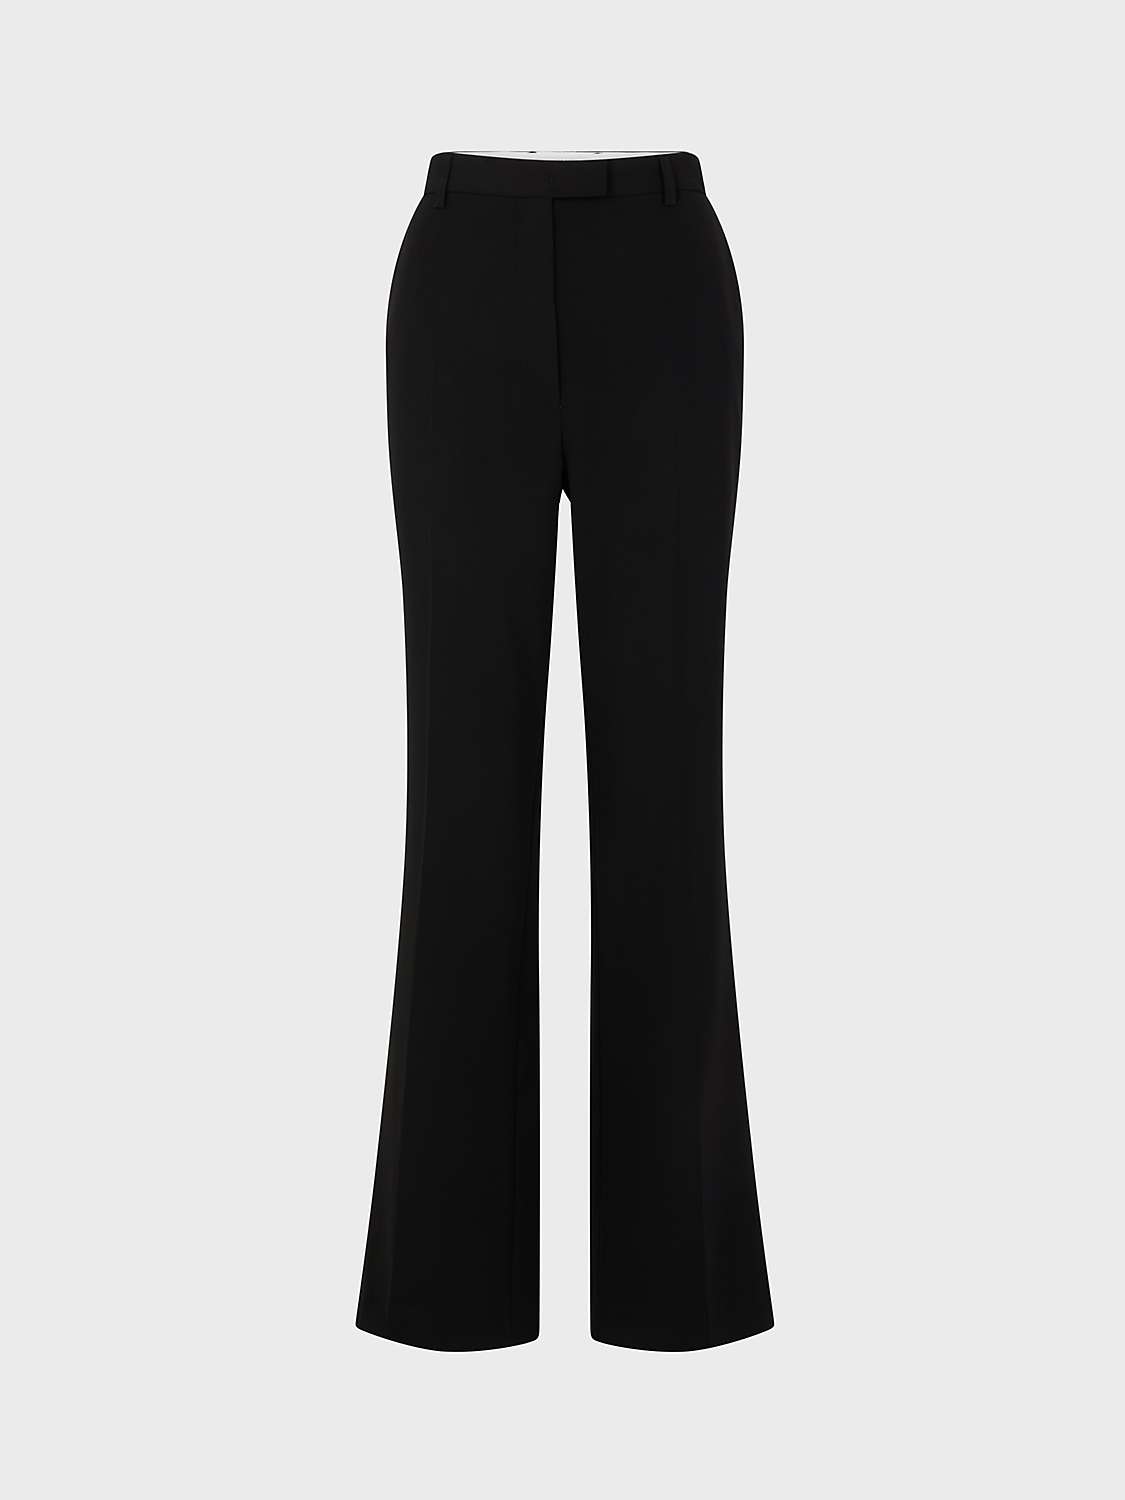 Buy Gerard Darel Cassiopee Trousers, Black Online at johnlewis.com